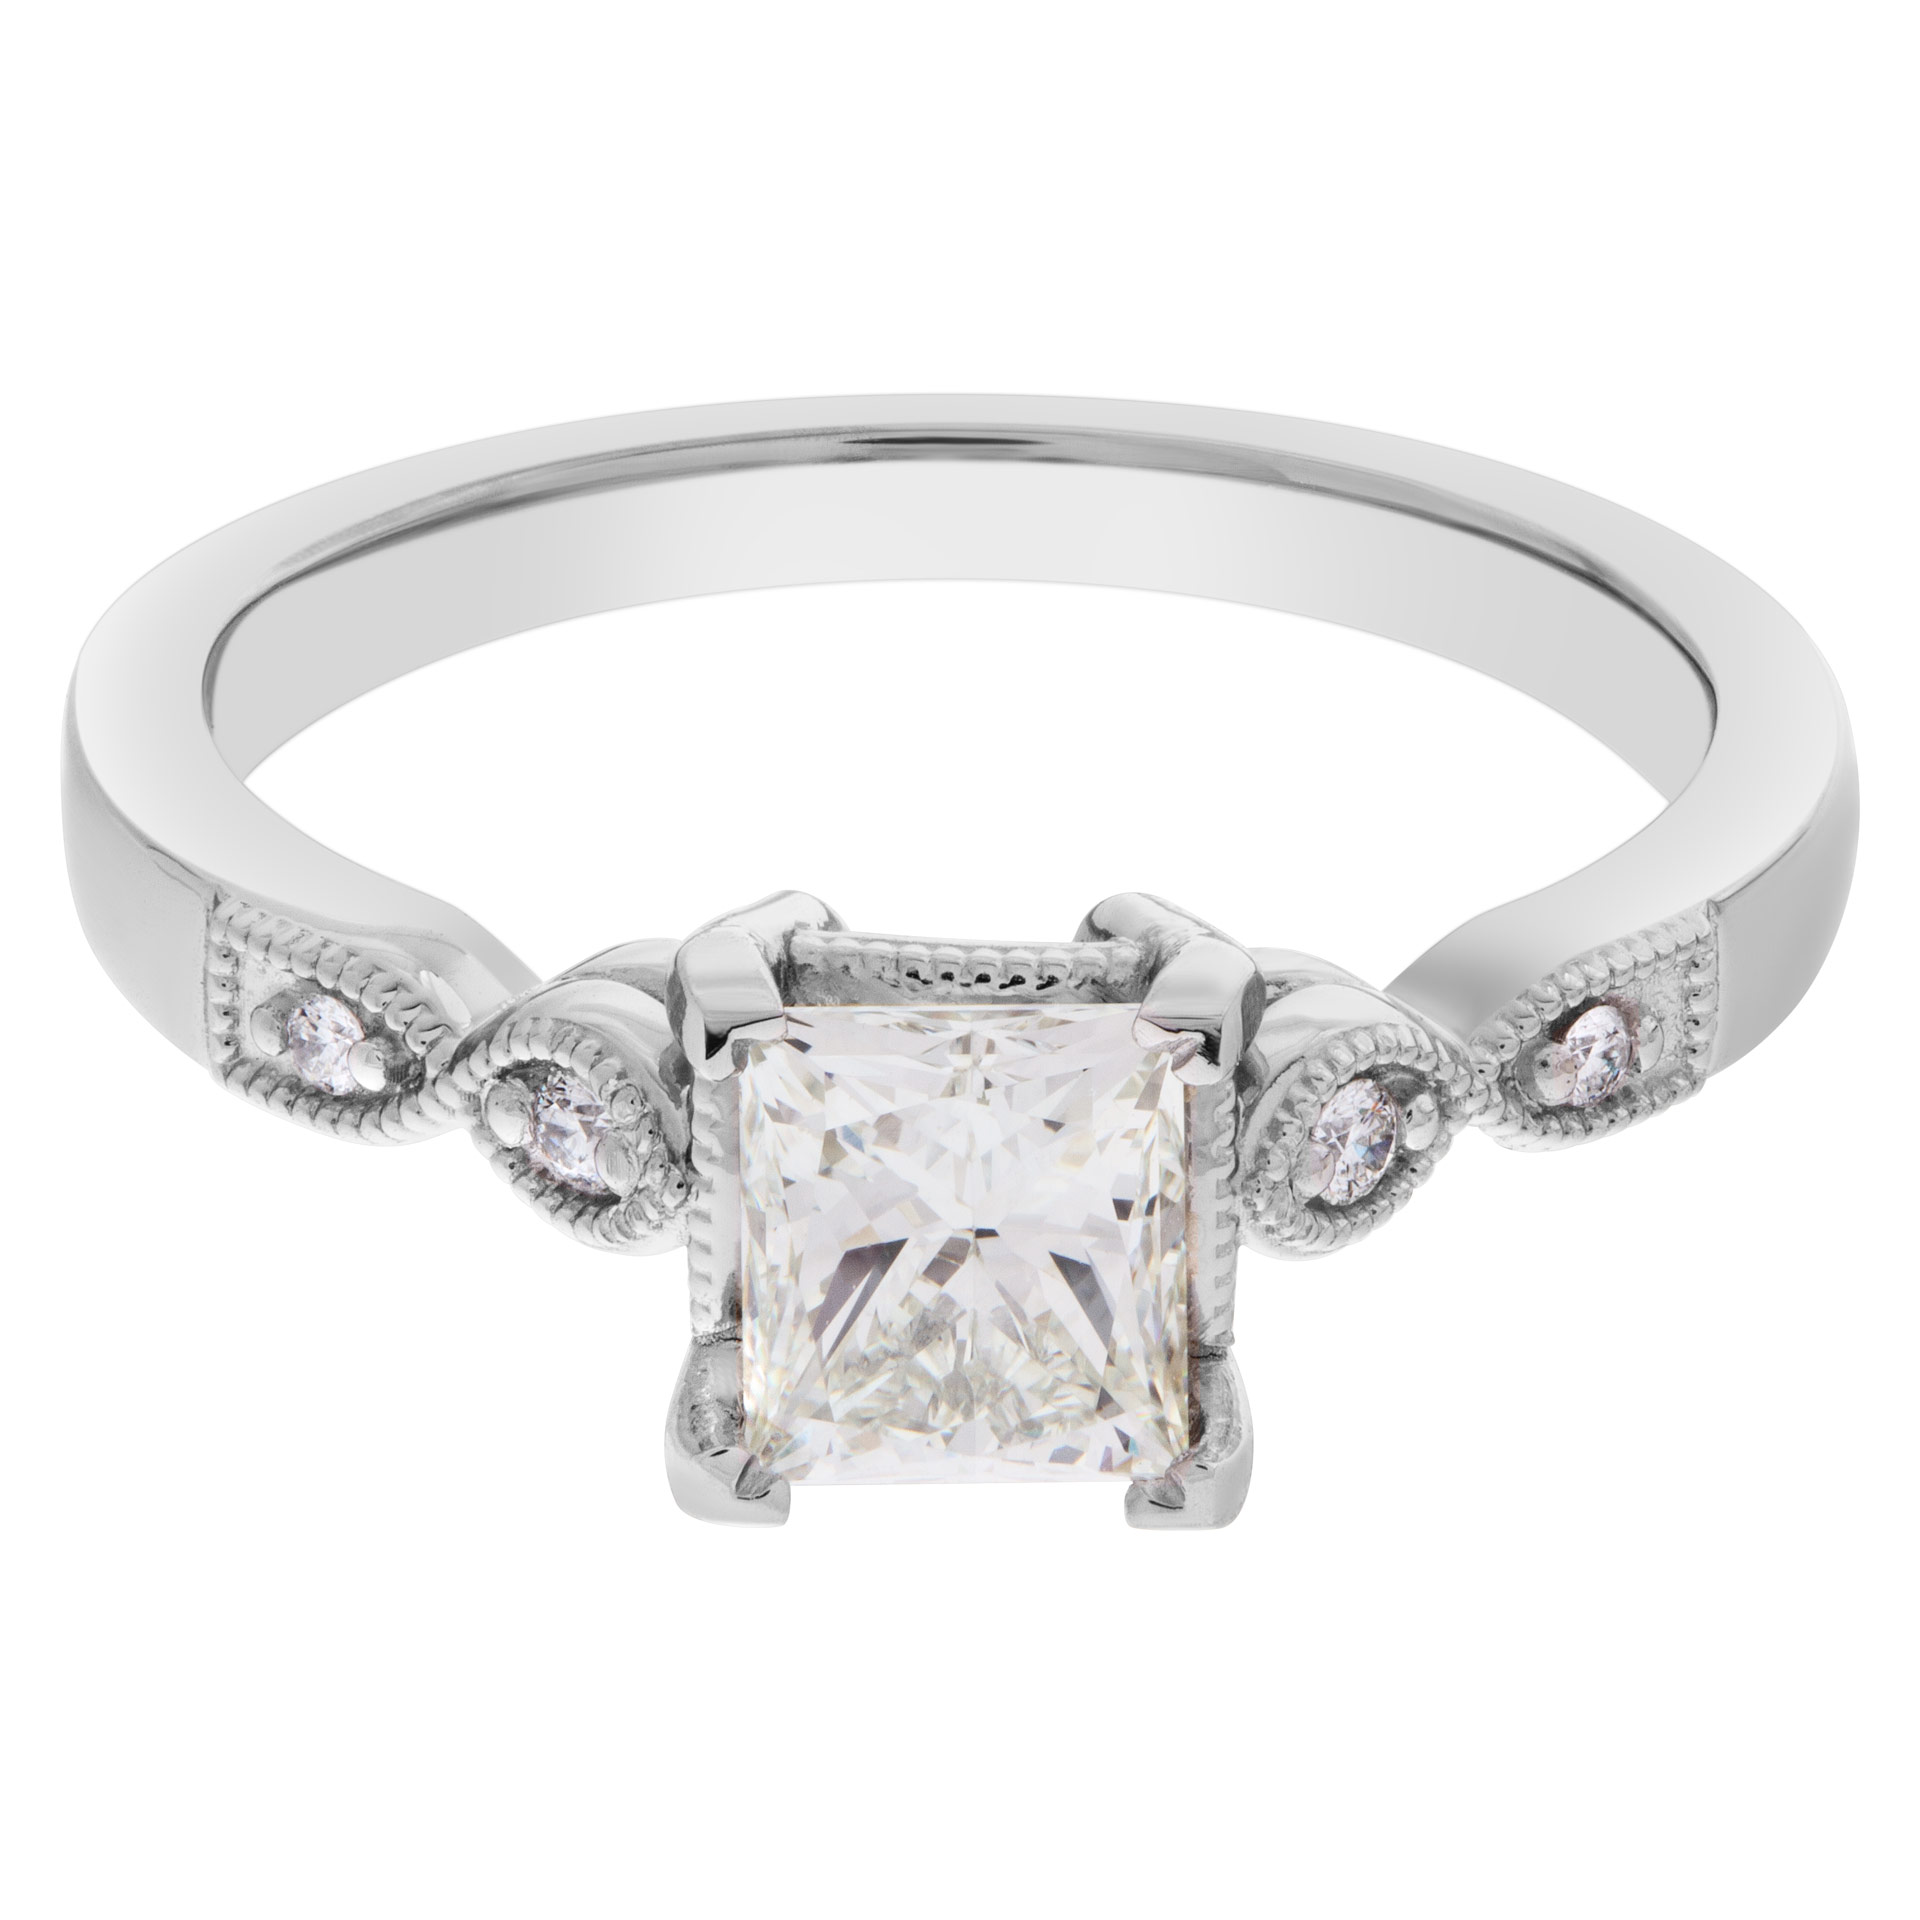 GIA certified rectangular modified brilliant cut diamond 1.03 carat (L color, VVS2 clarity) ring image 1